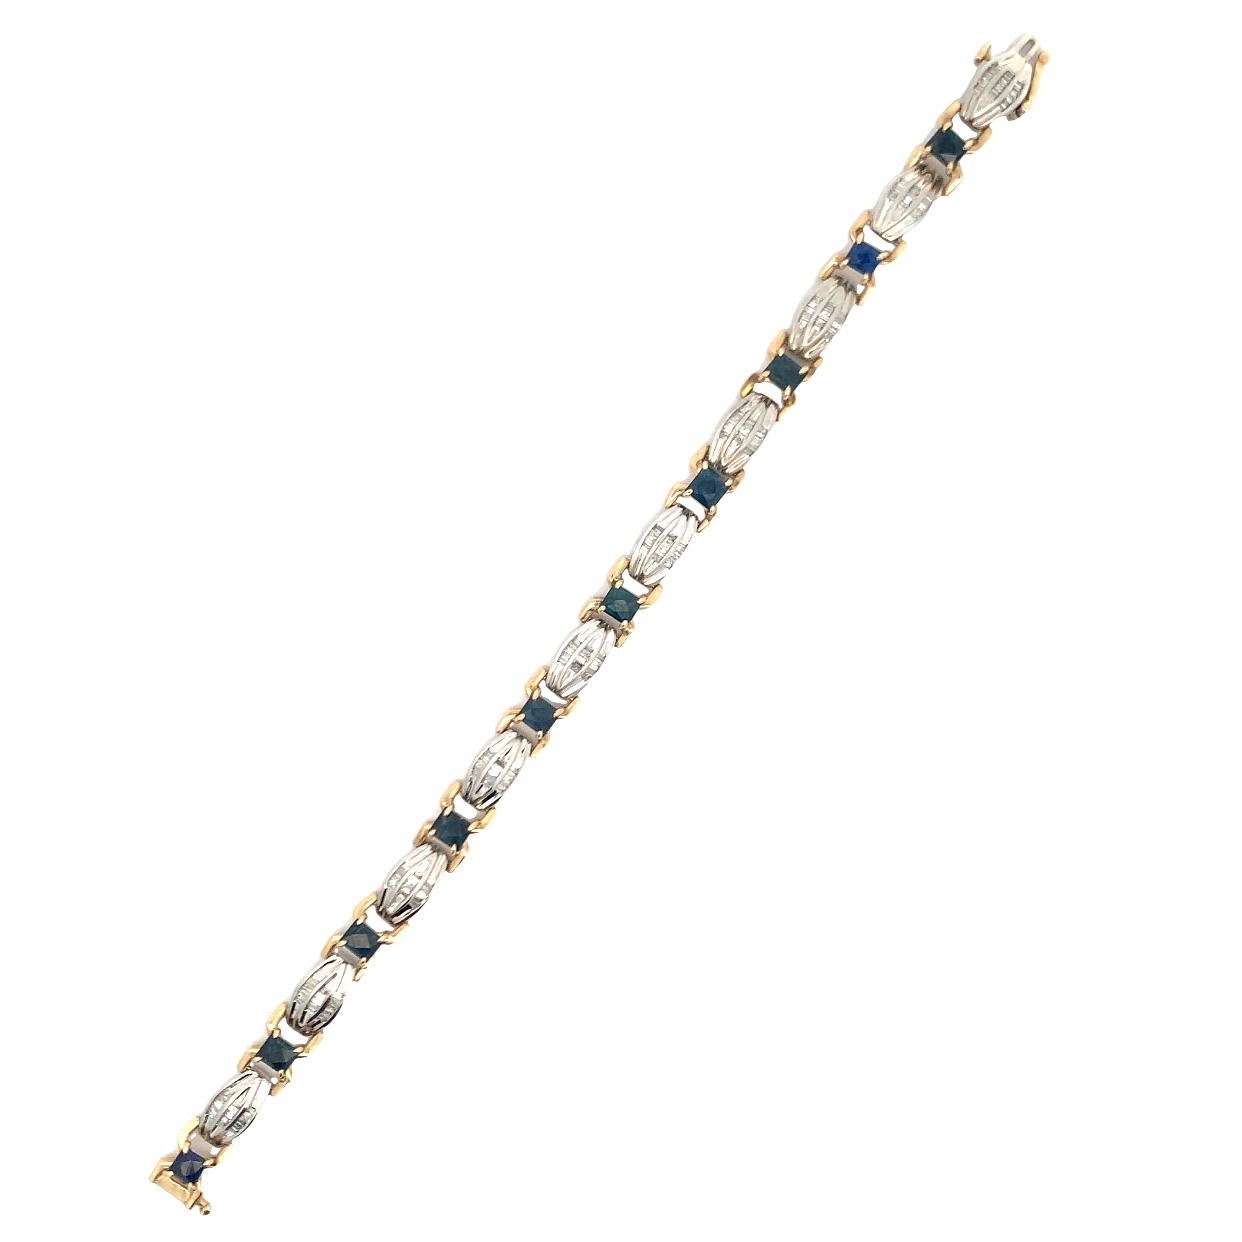 Sapphire & Diamond Bracelet.

A bracelet consisting of 10 sapphires & baguette cut diamonds set in 14 karat white & yellow gold.
Sapphire Weight: approximately 4.20 carats
Measurements: 7.25